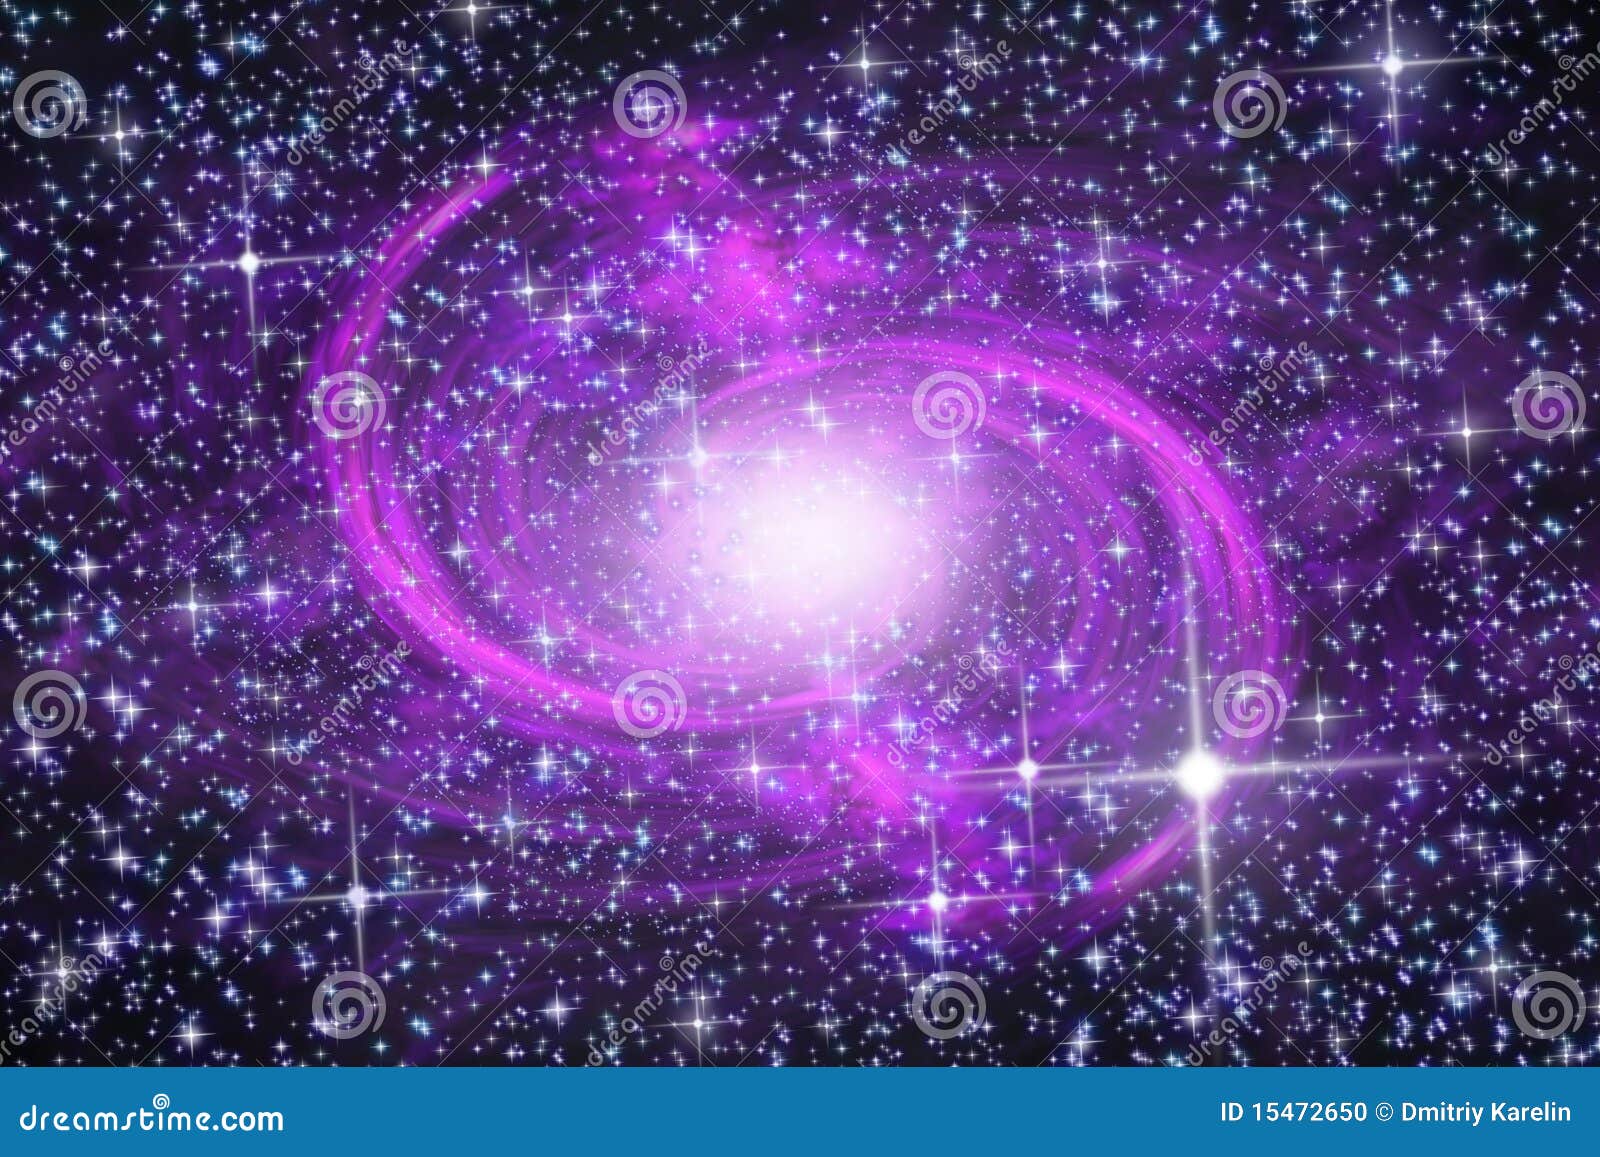 Spiral galaxy stock illustration. Illustration of imploding - 15472650